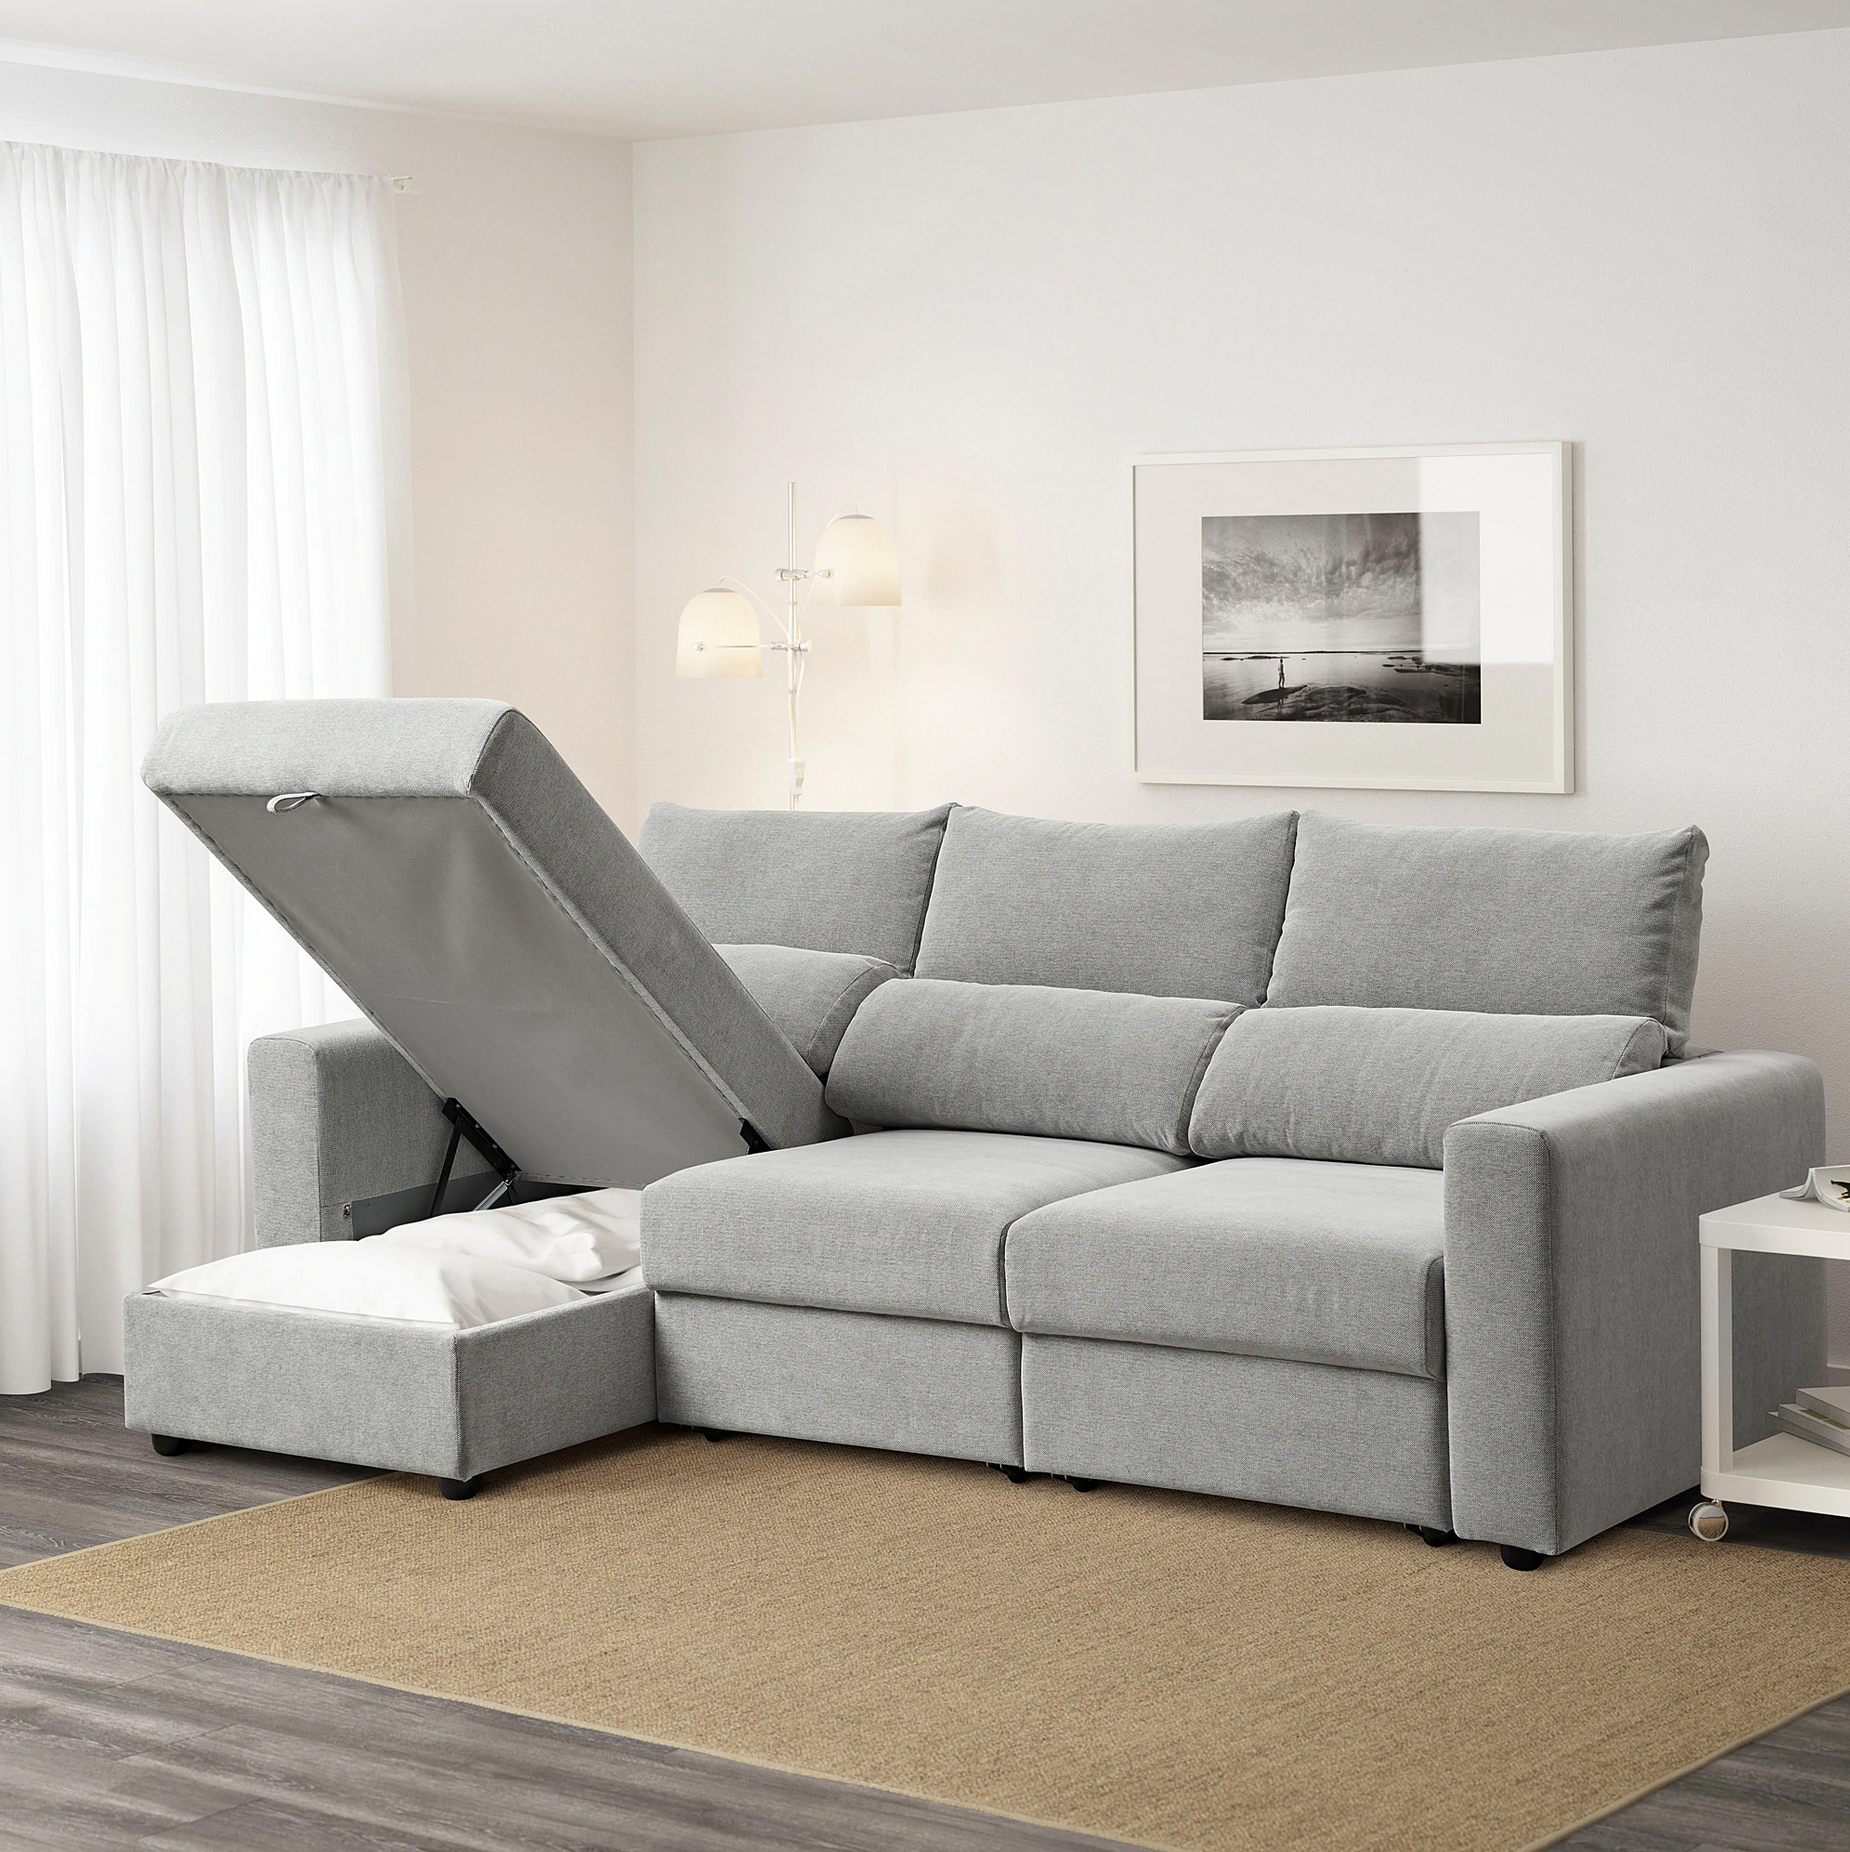 Eskilstuna sofá 3 plazas con chaise longue. Un sofá cama con chaiselongue y respaldo alto